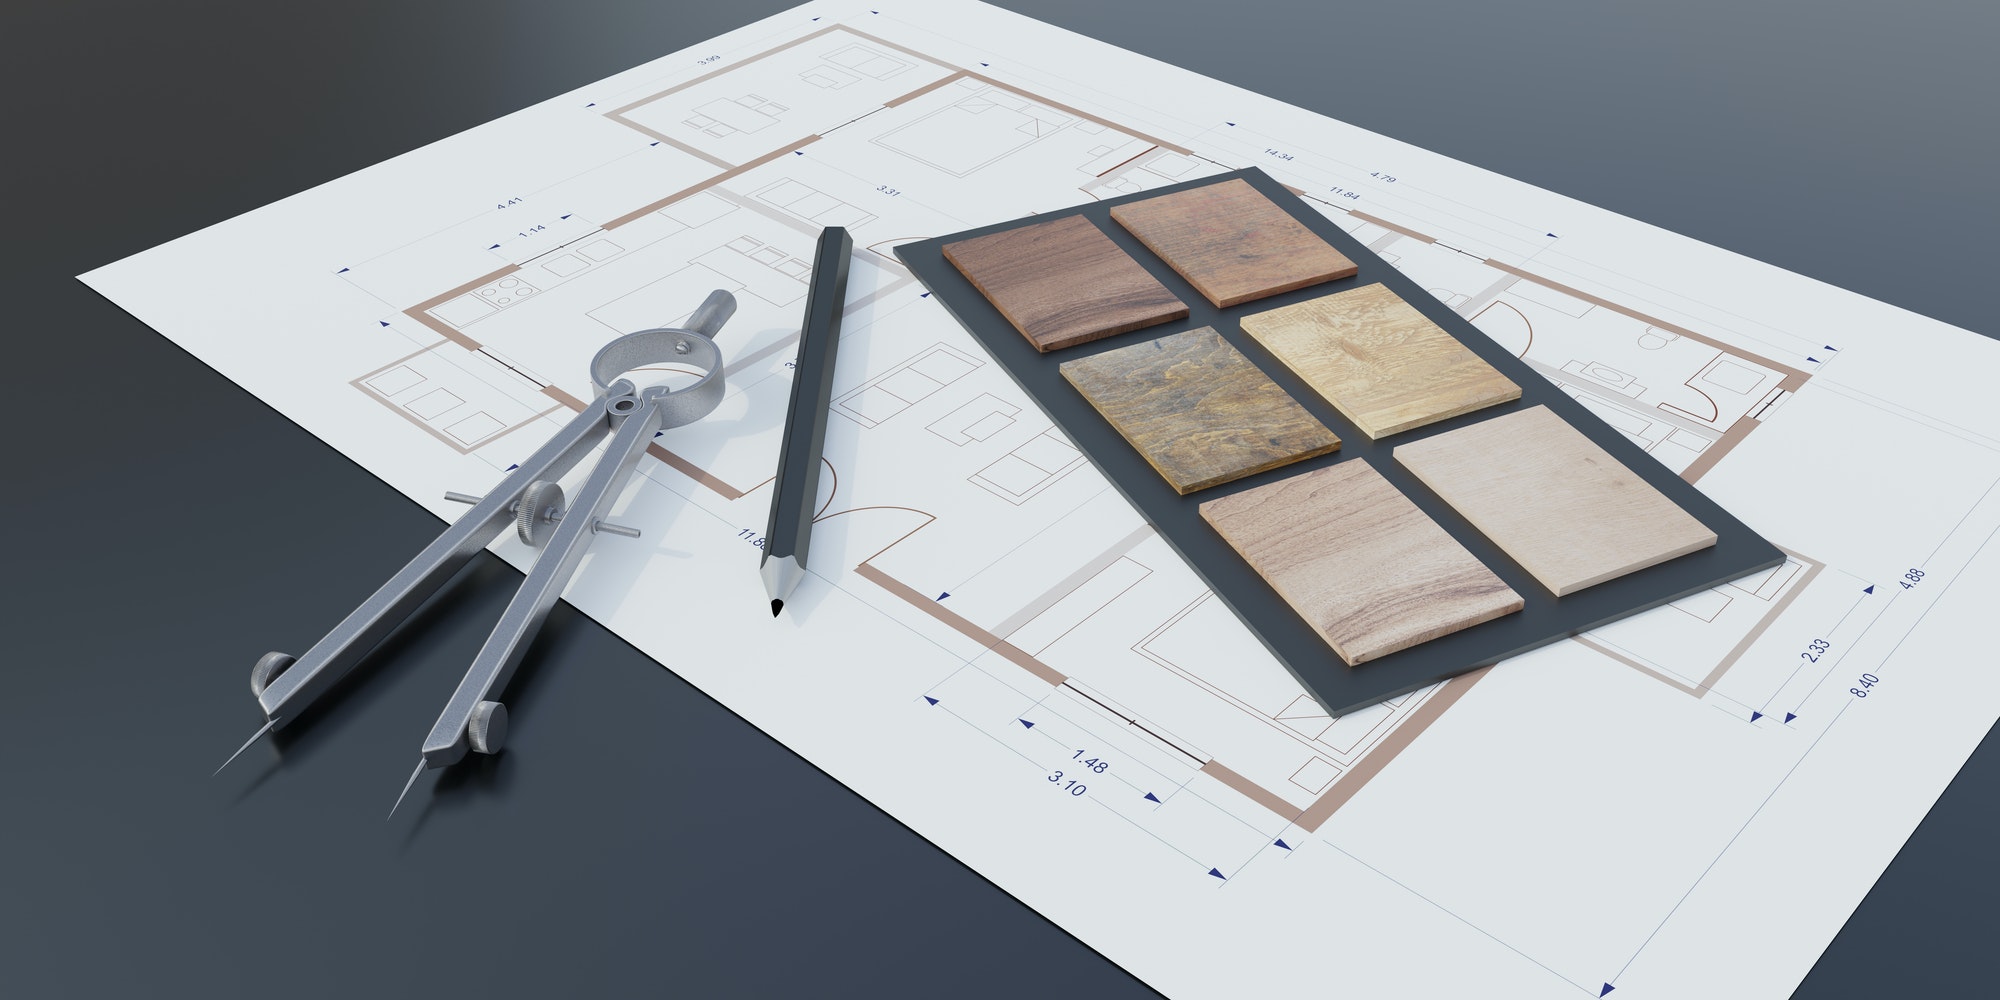 Design furniture home. Pencil, calipers, various wooden sample on blueprint background. 3d render